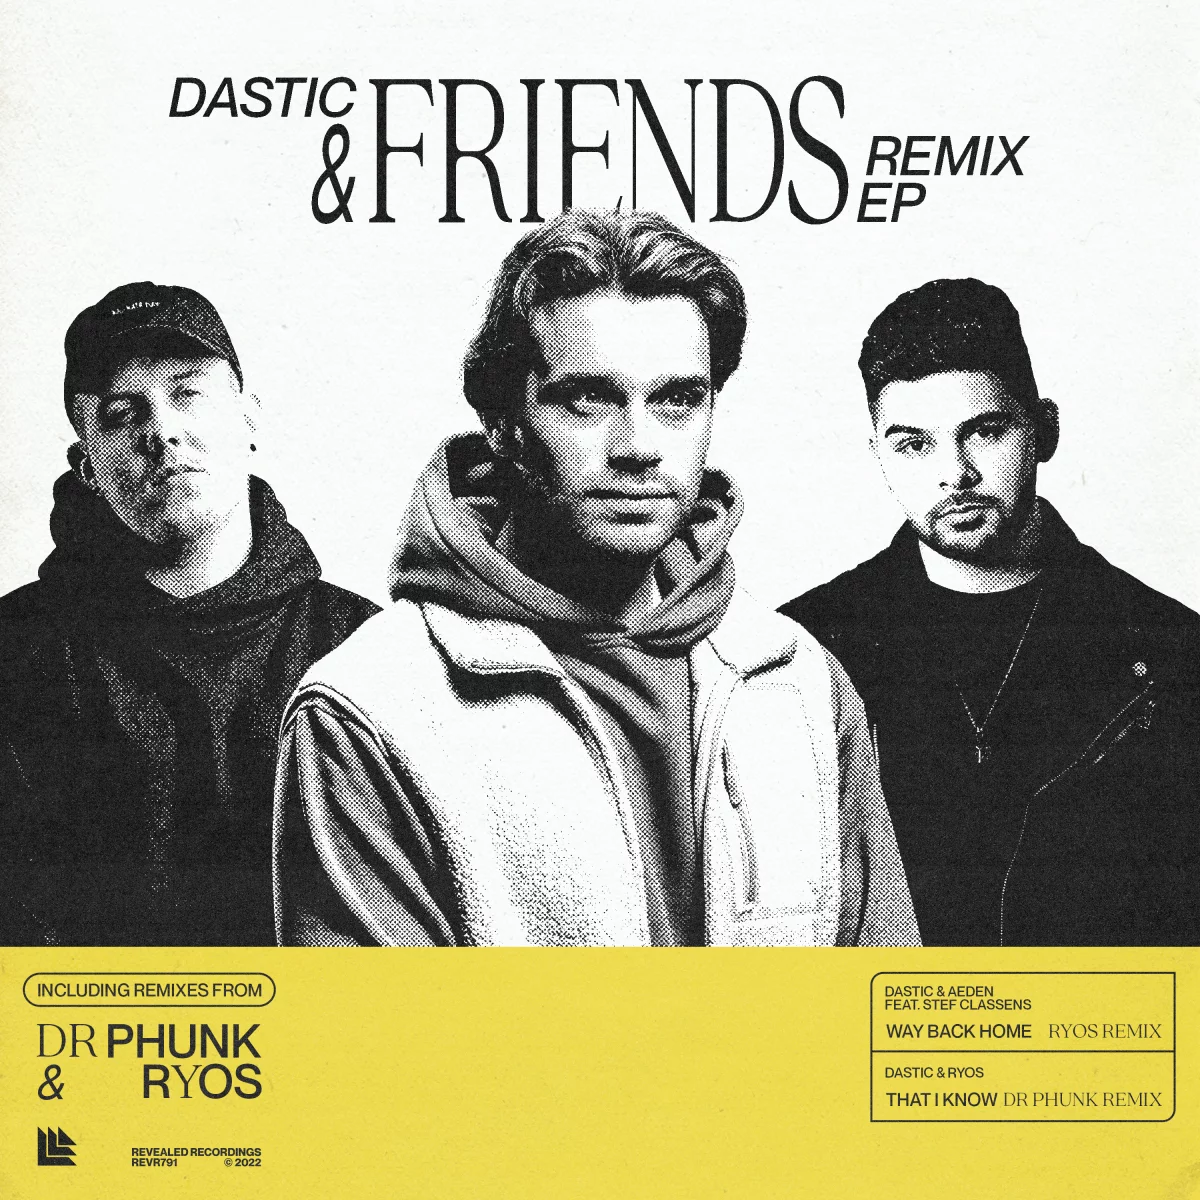 Dastic & Friends Remix EP - Dastic⁠, Ryos⁠ & Dr Phunk⁠ 